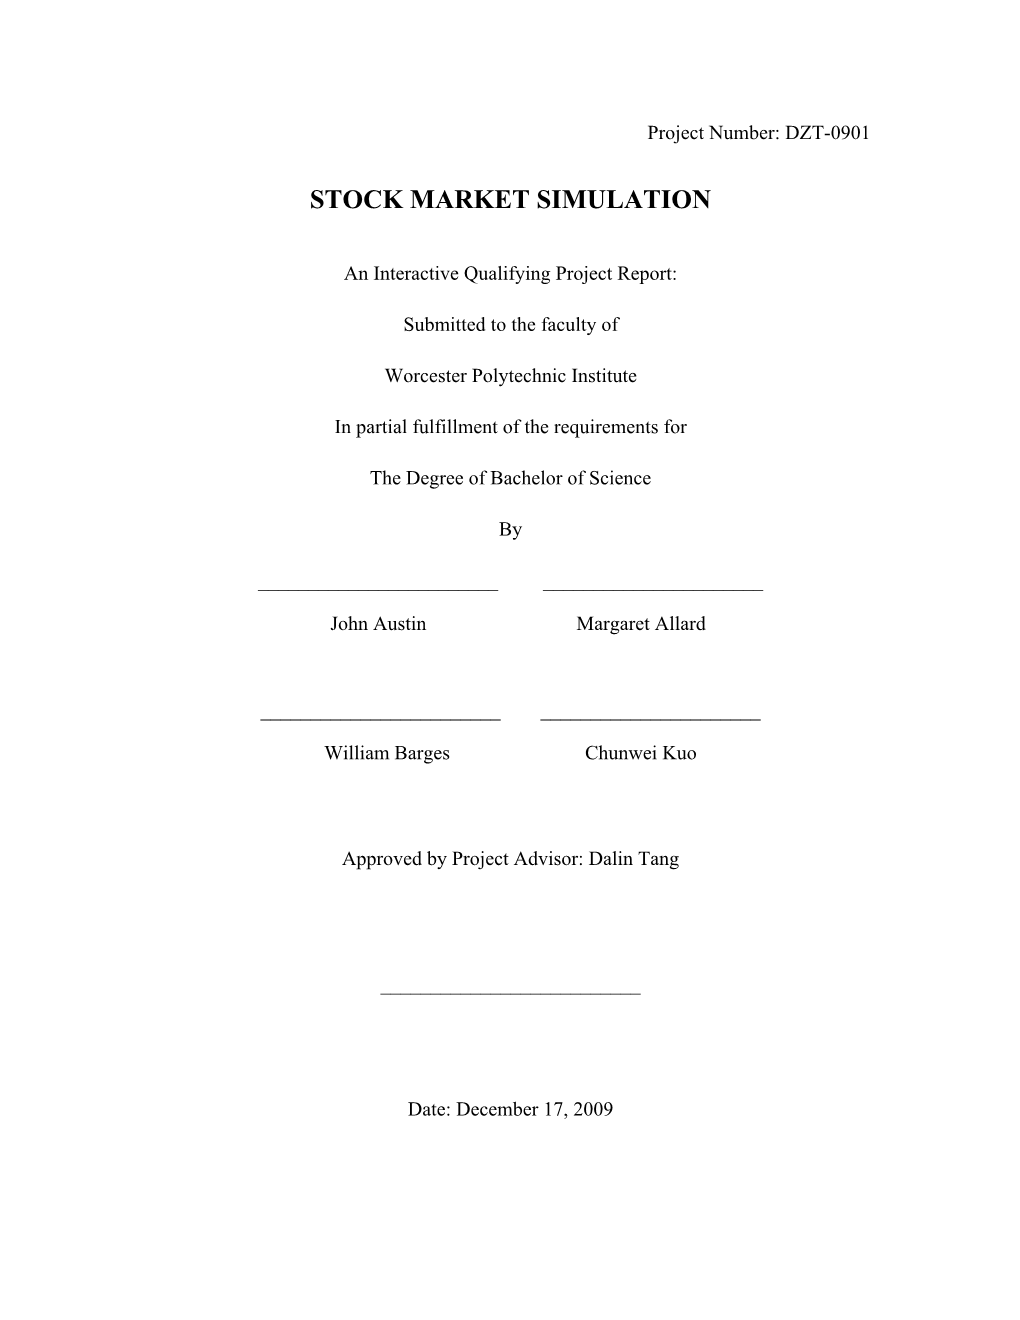 Stock Market Simulation